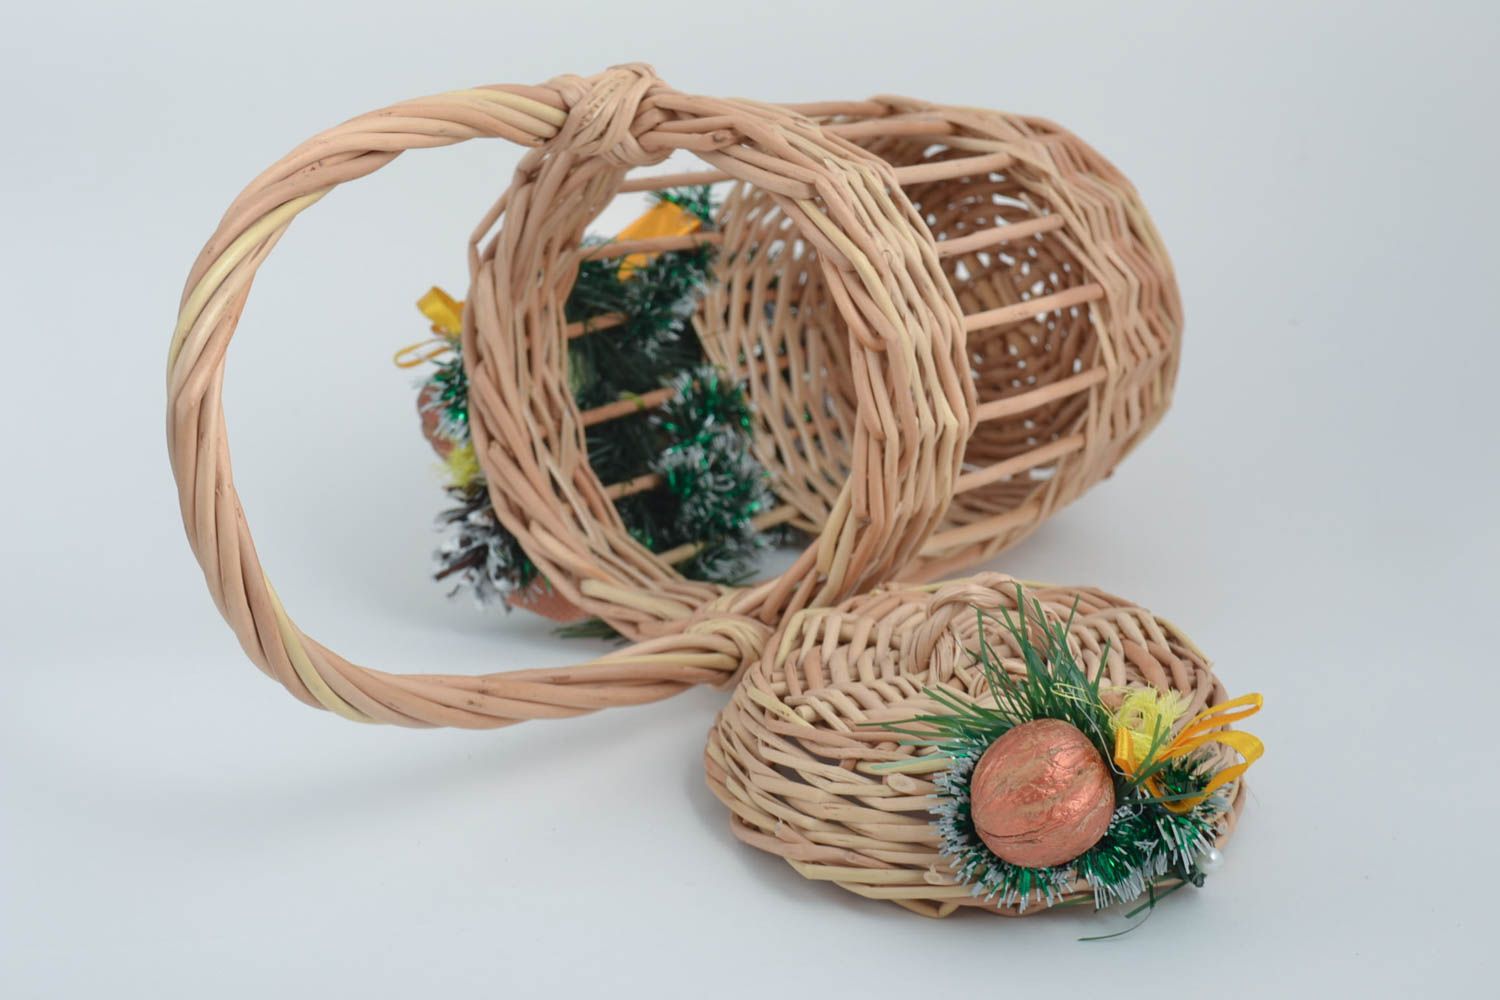 Unusual handmade woven basket designer Easter basket ideas gift ideas photo 4